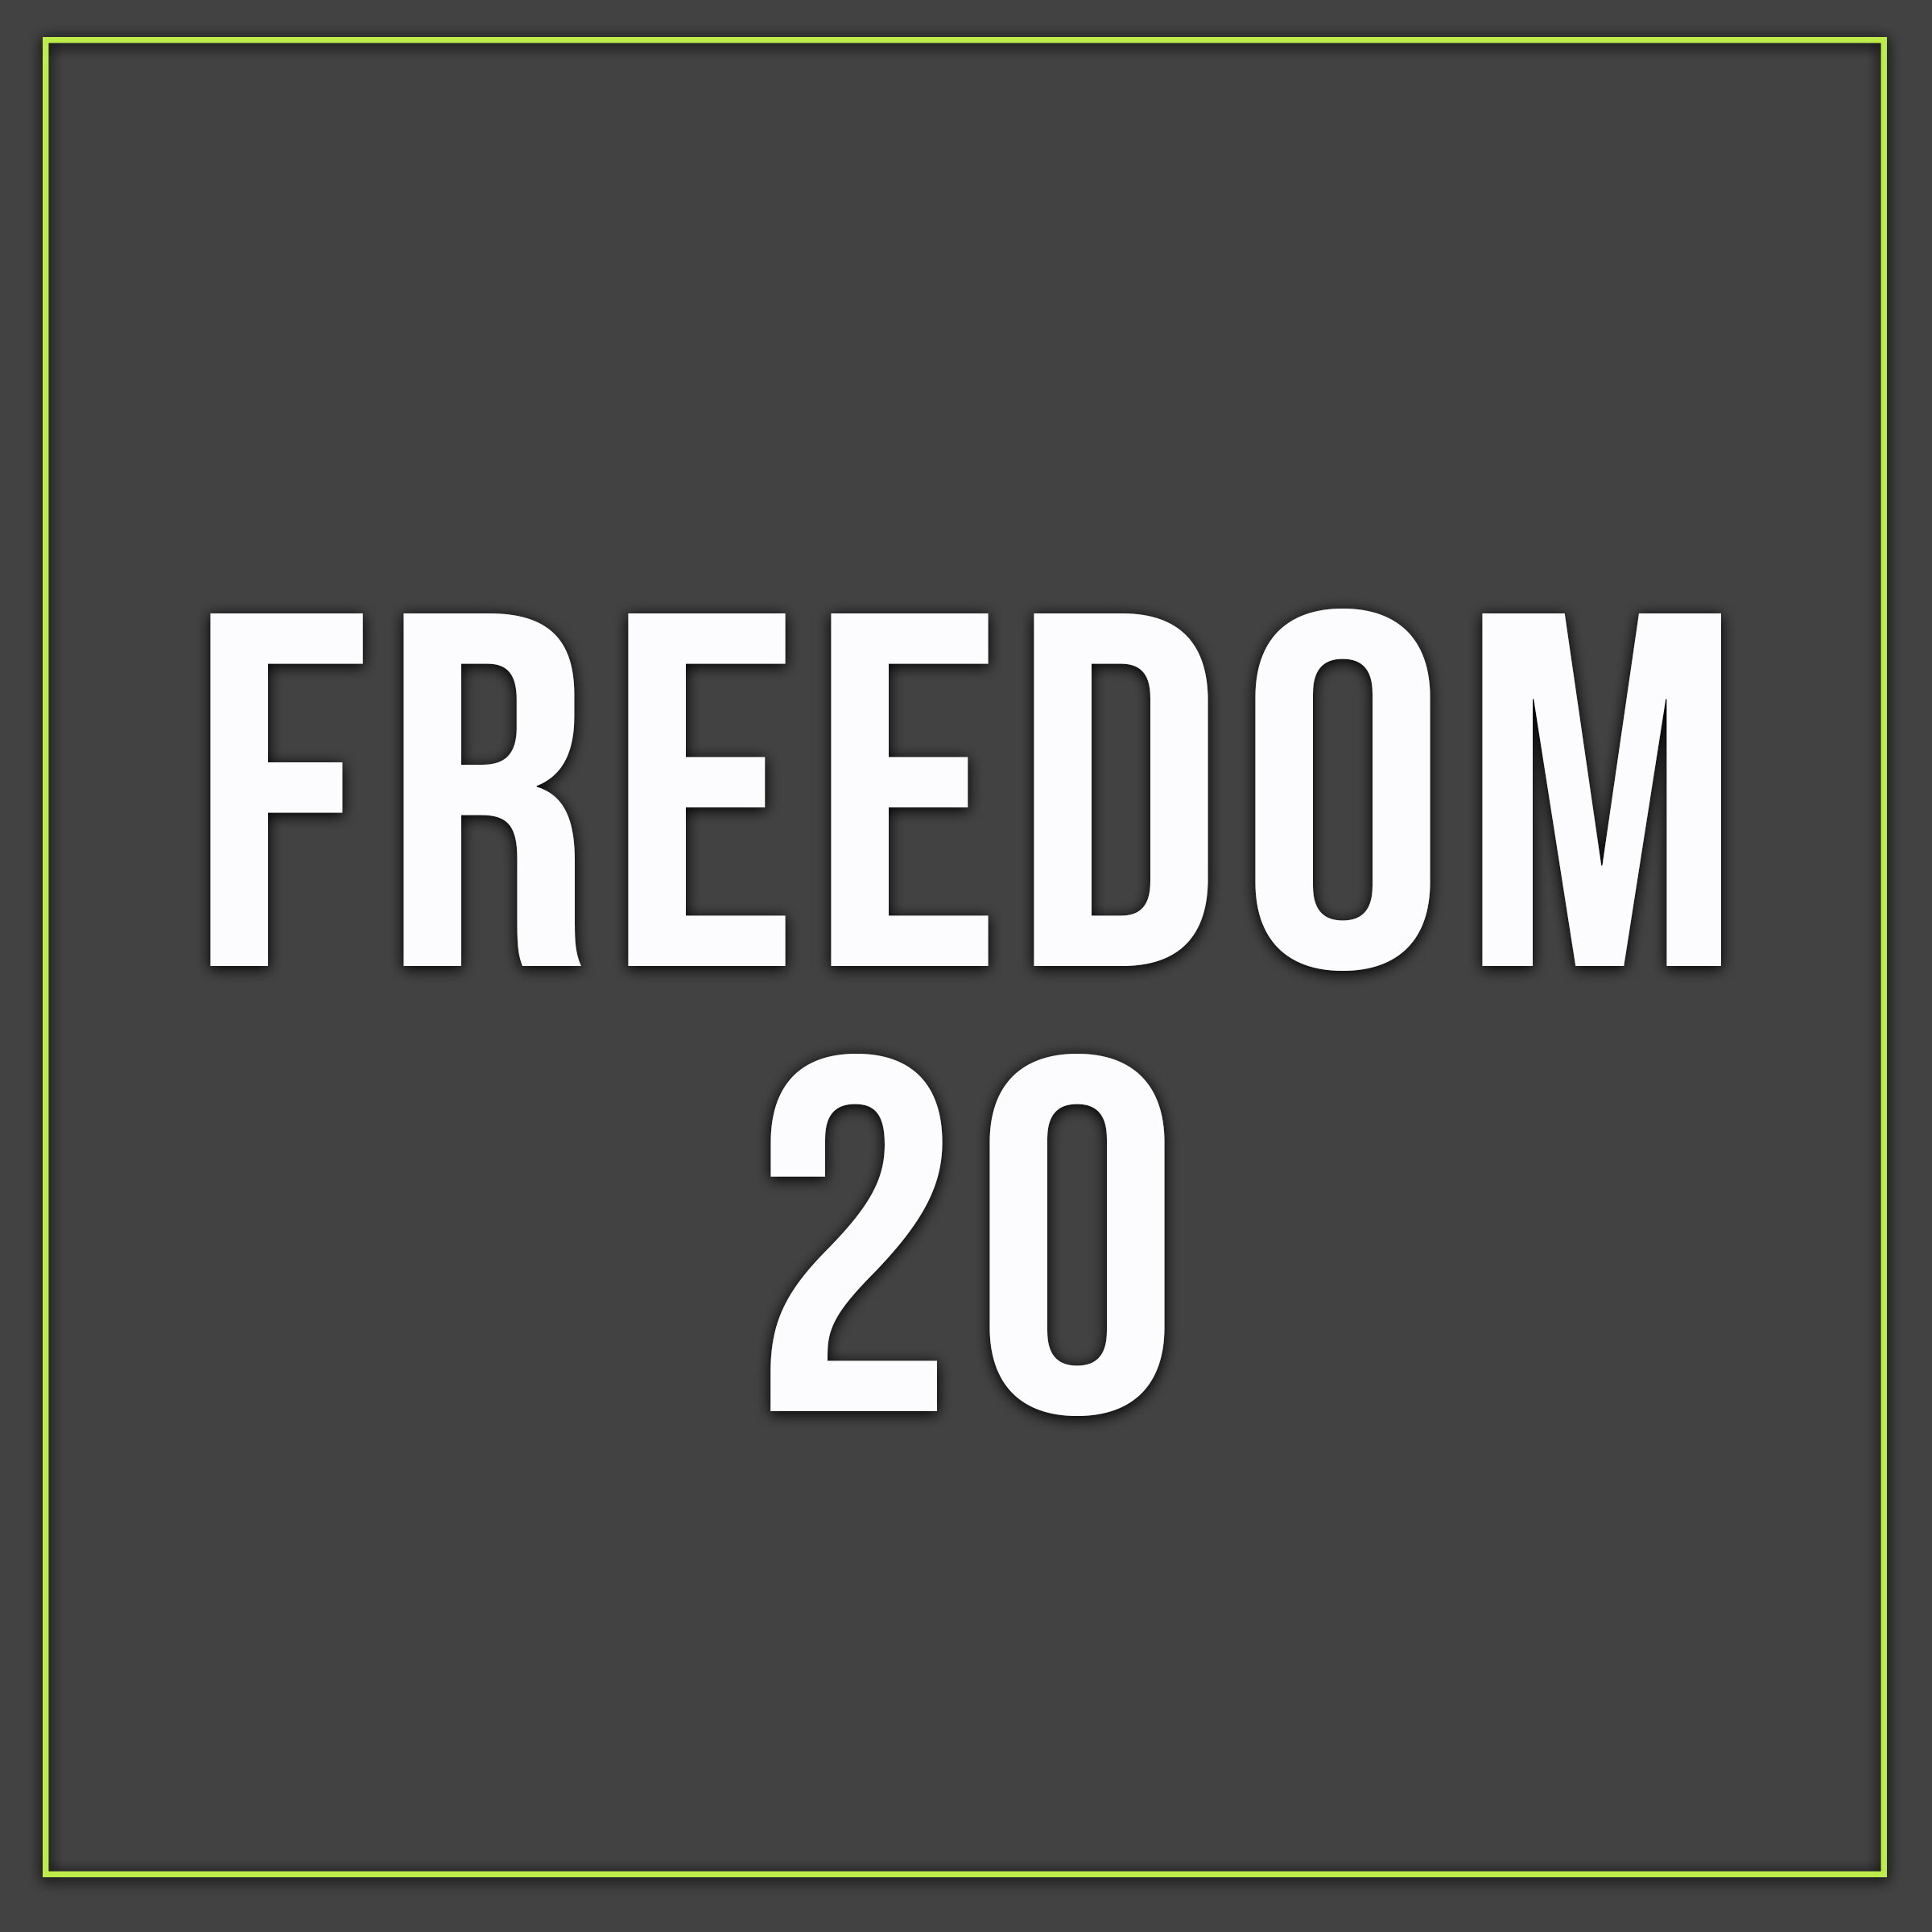 Freedom 20.jpg